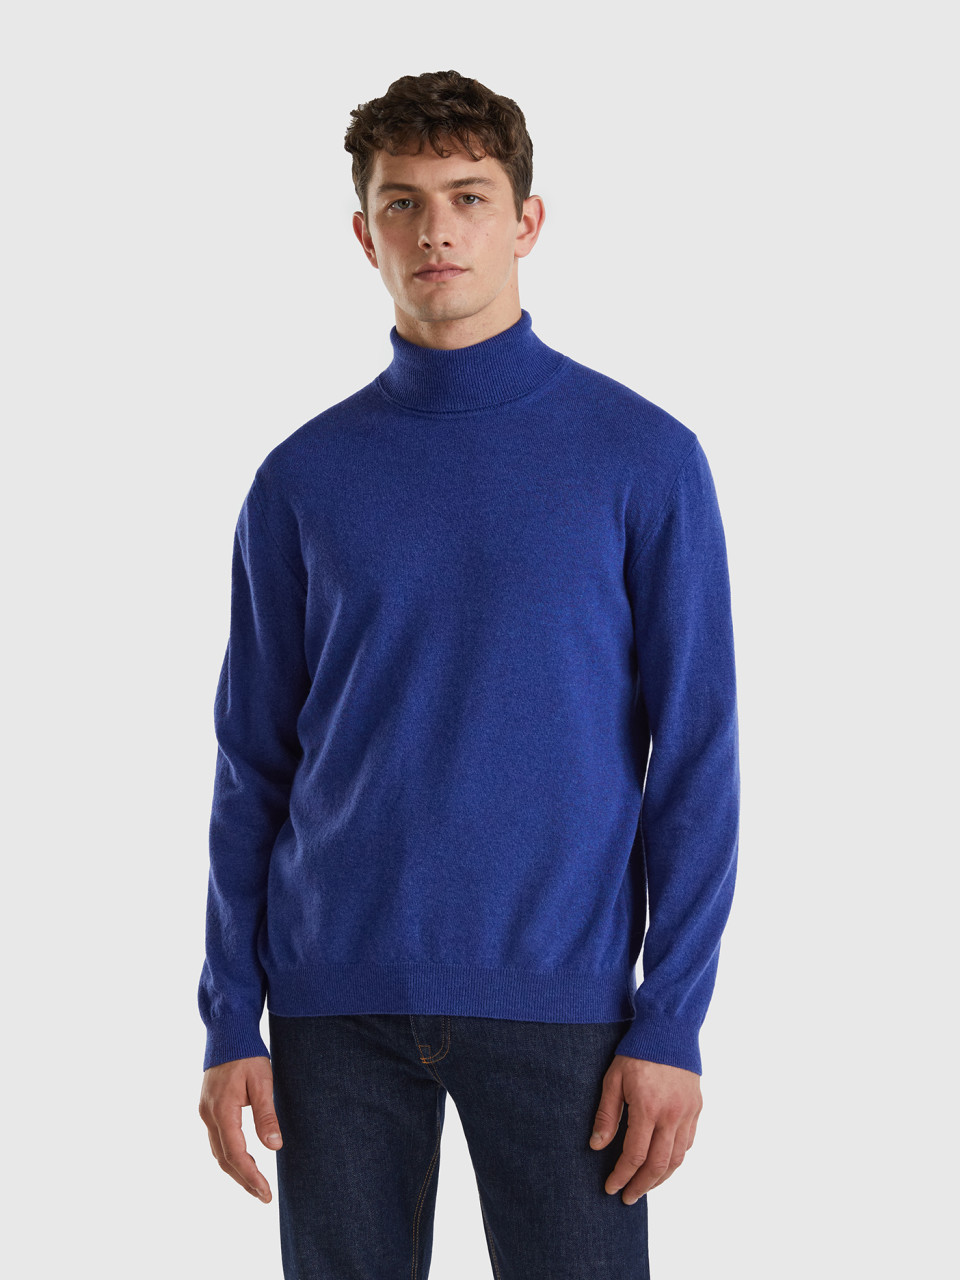 Benetton, Blue Turtleneck In Pure Merino Wool, Bright Blue, Men